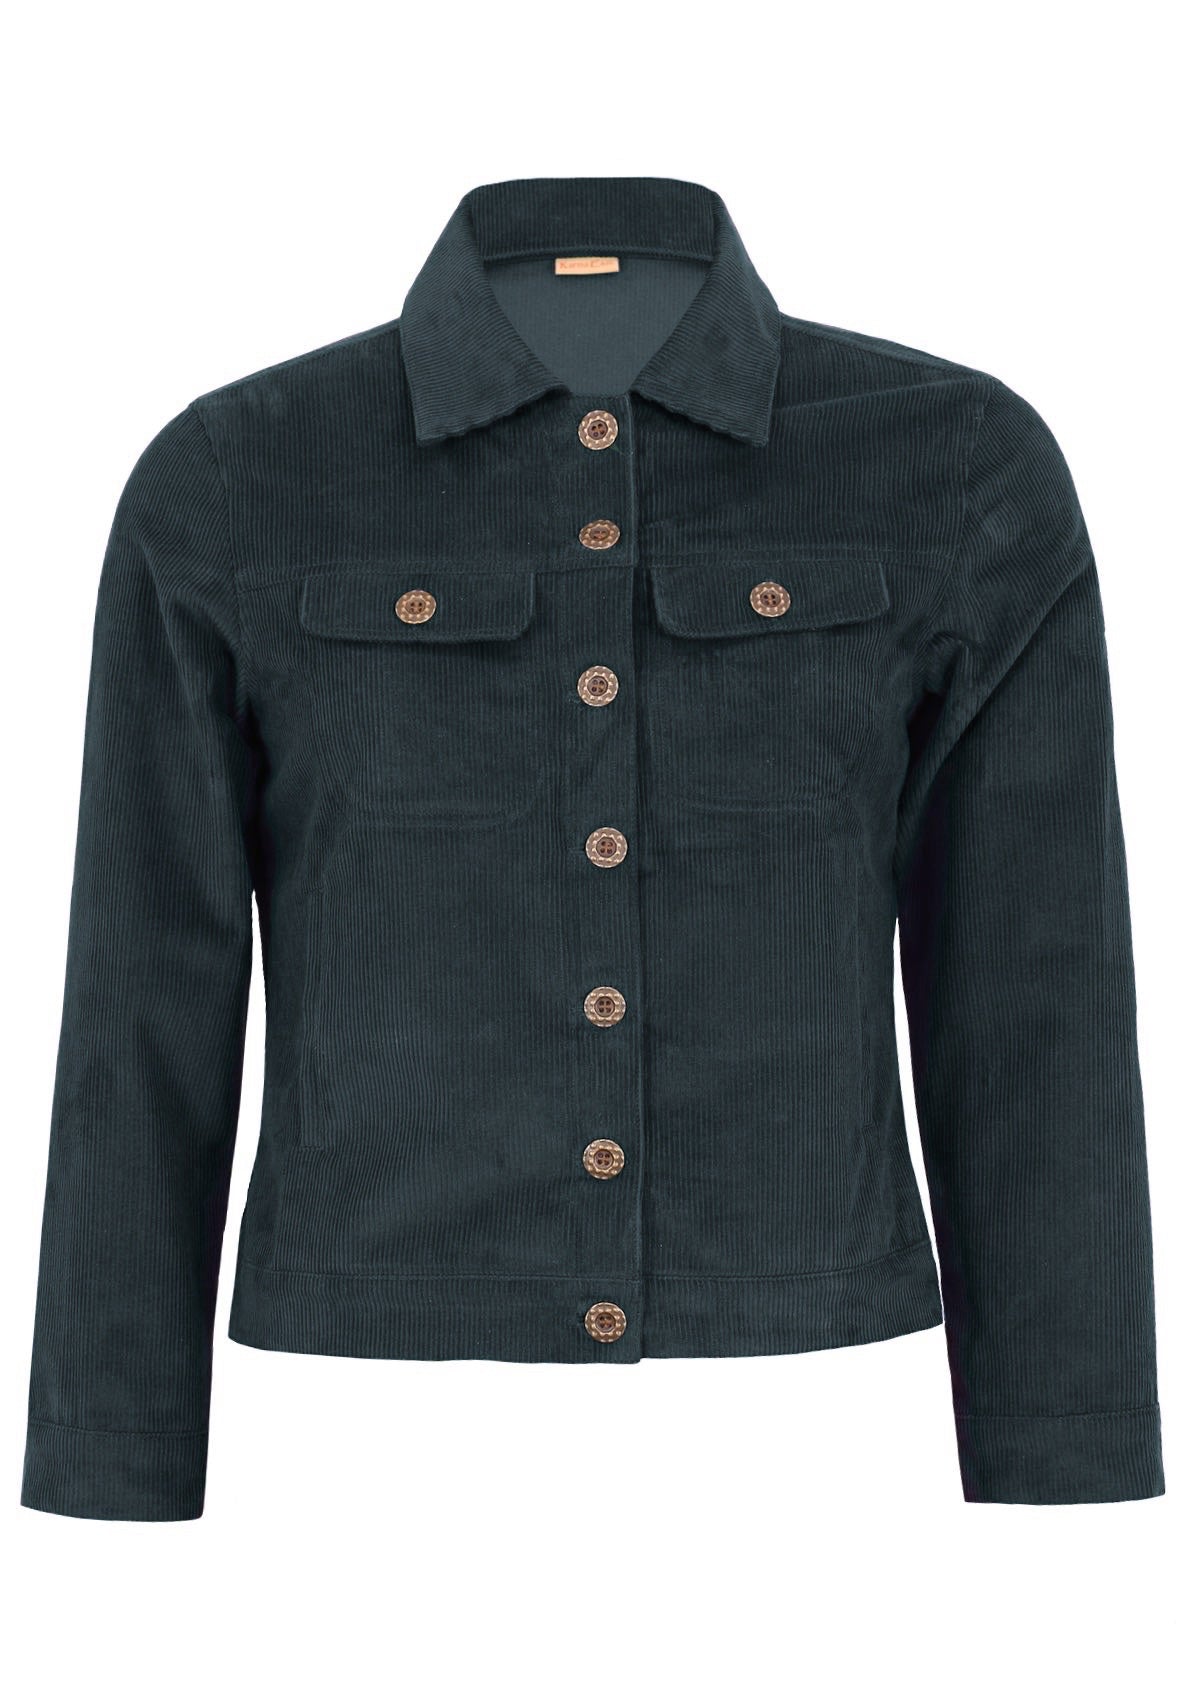 Grey 100% cotton corduroy jacket with four pockets. 